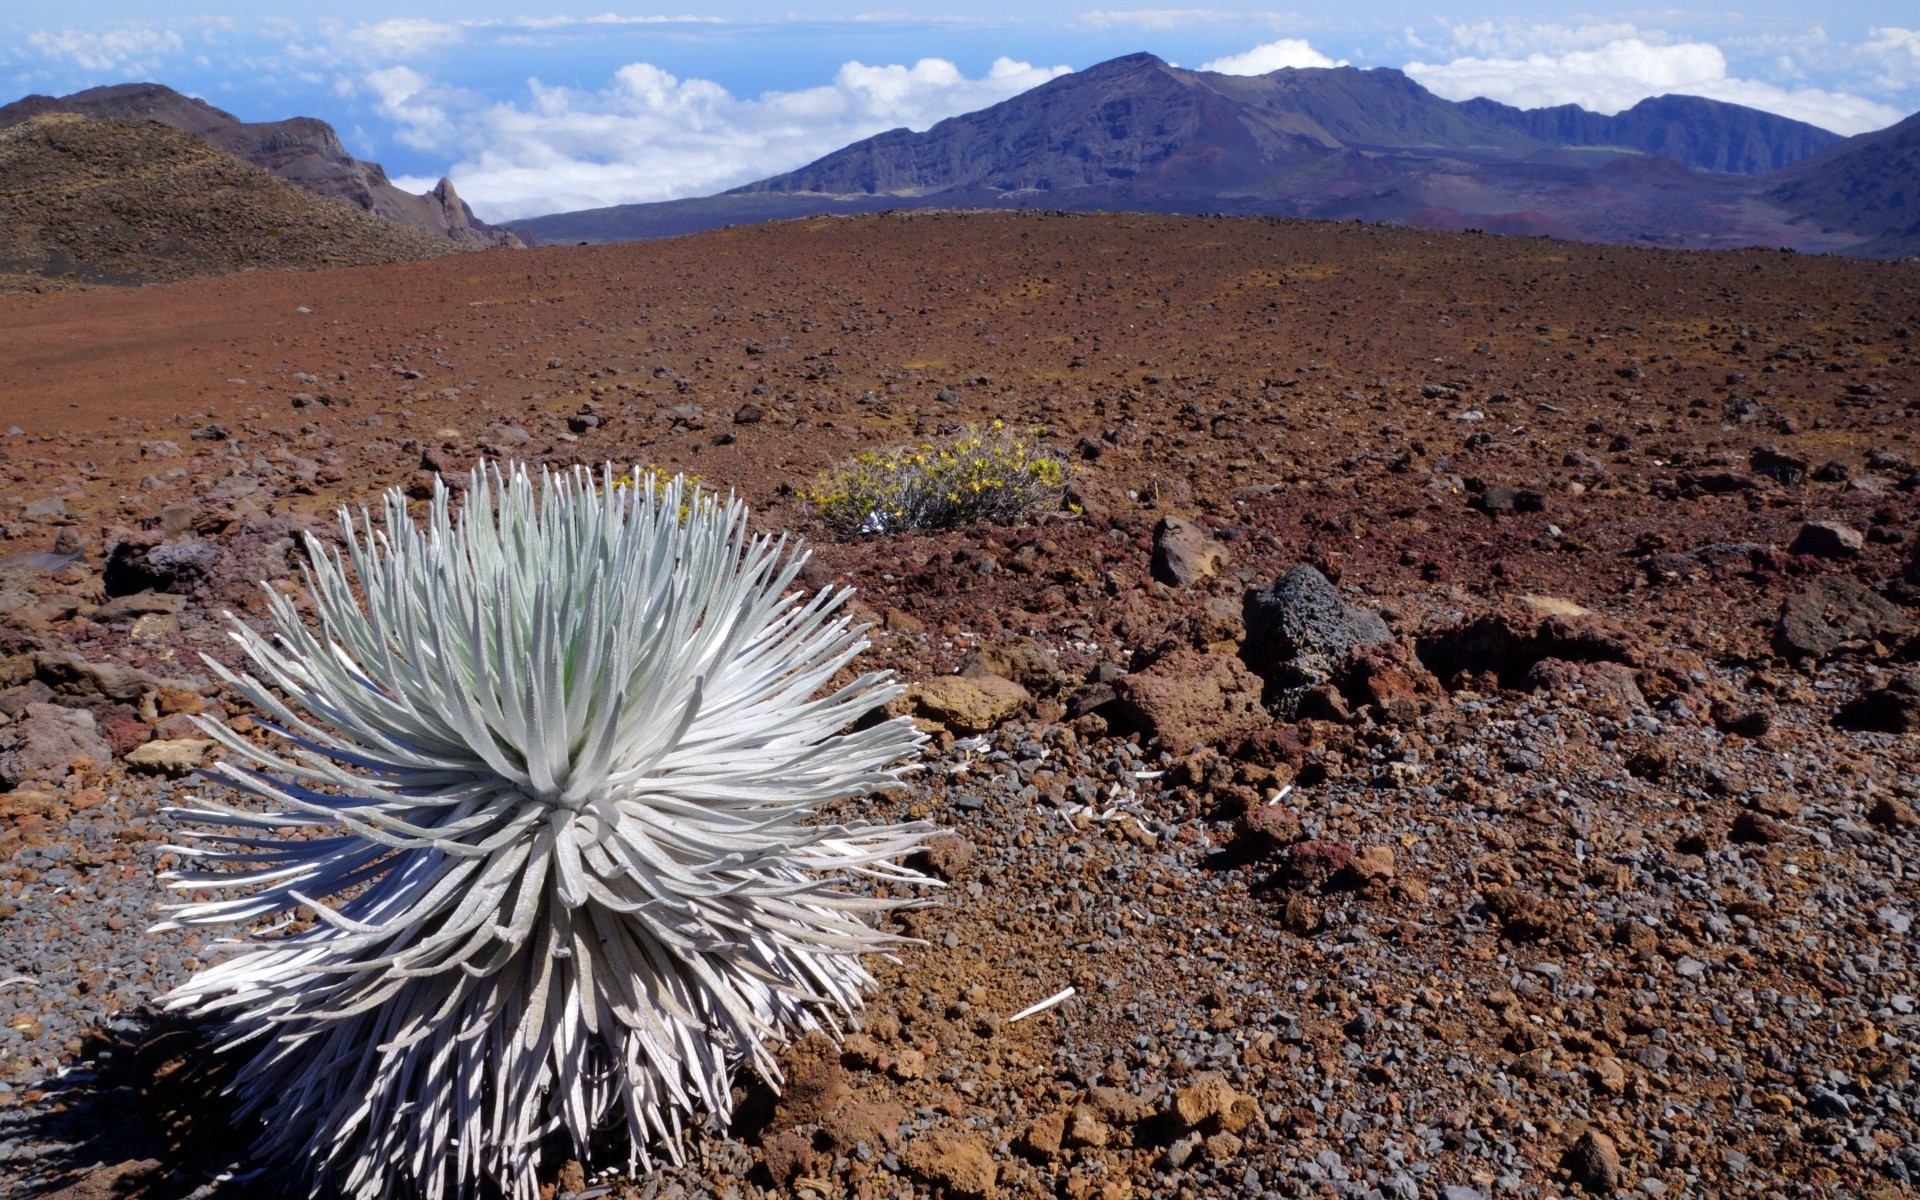 islands desert cactus arid dry landscape outdoors travel nature sky mountain sand volcano hot soil rock